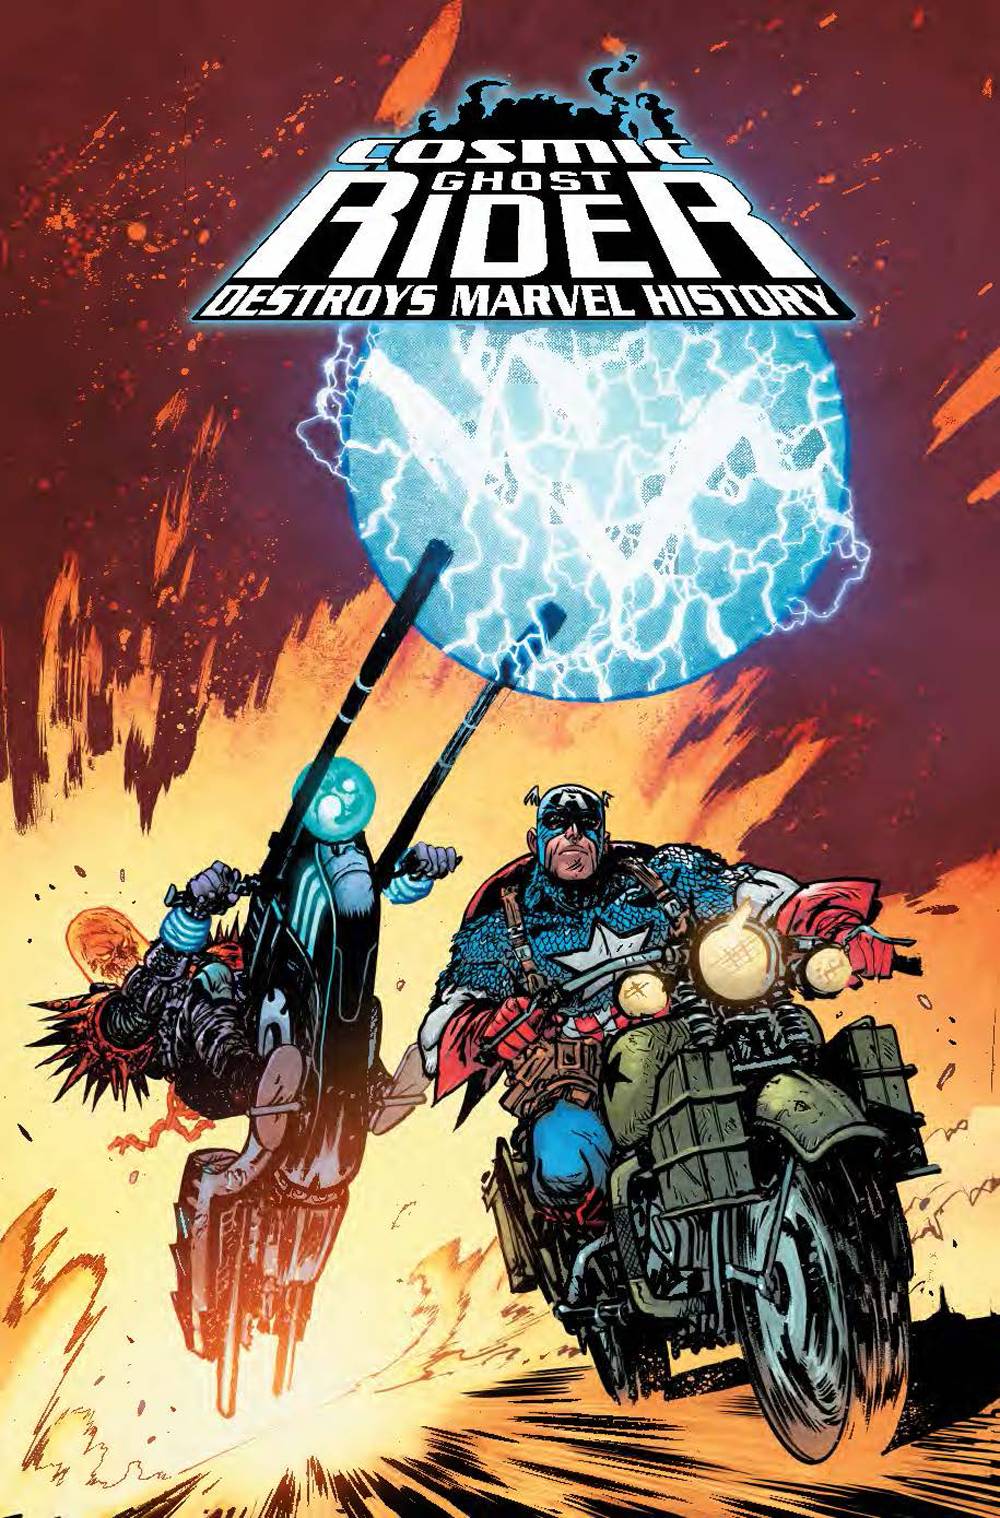 Cosmic Ghost Rider Destroys Marvel History #4 (of 6) Variant Edition (Johnson) [2019]